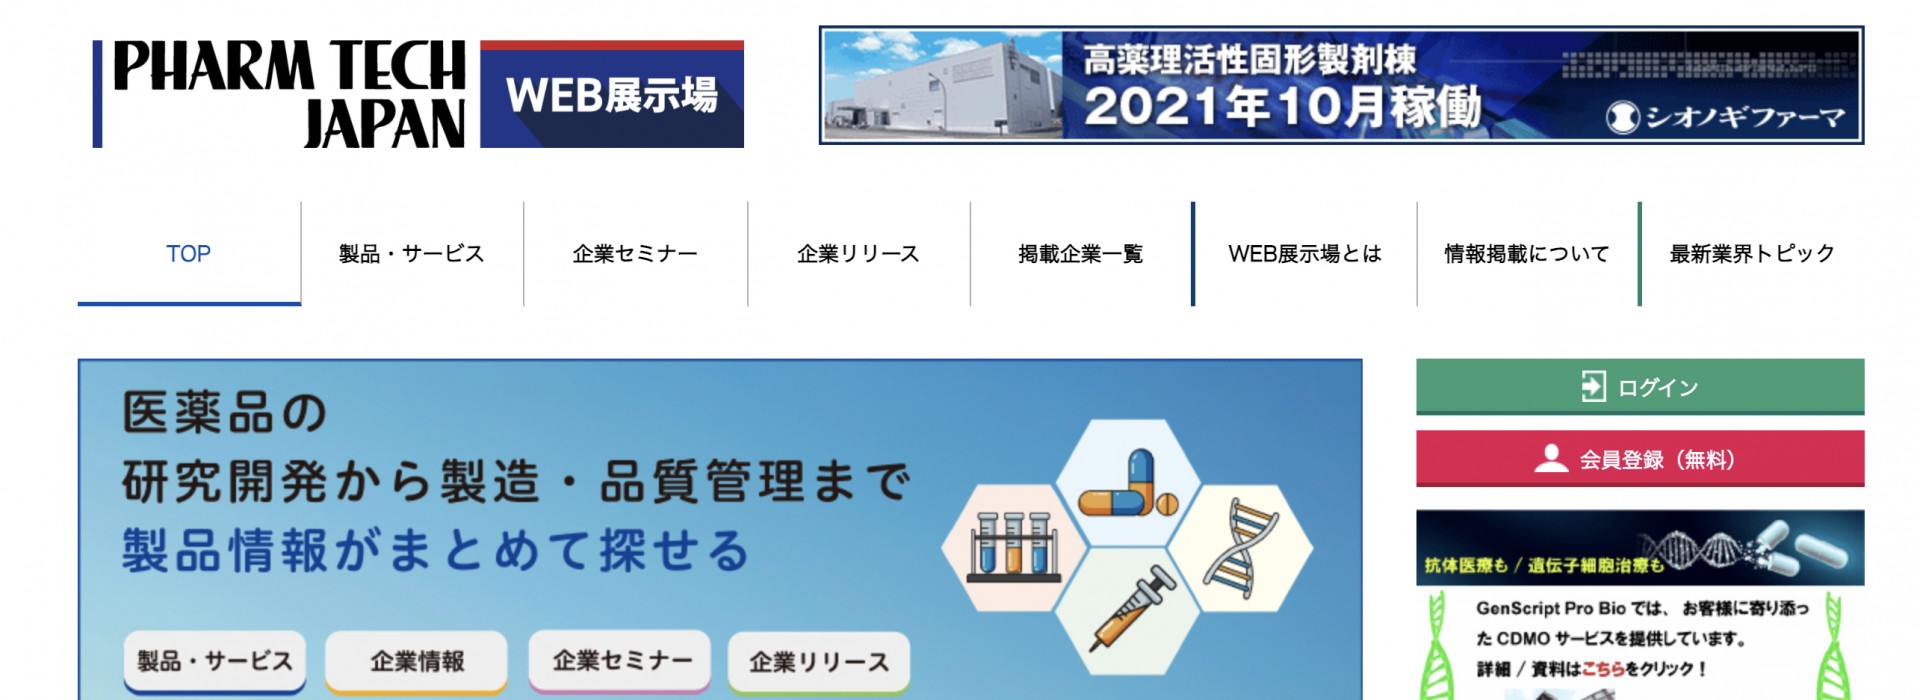 Dara Pharma en Pharma Tech Japan